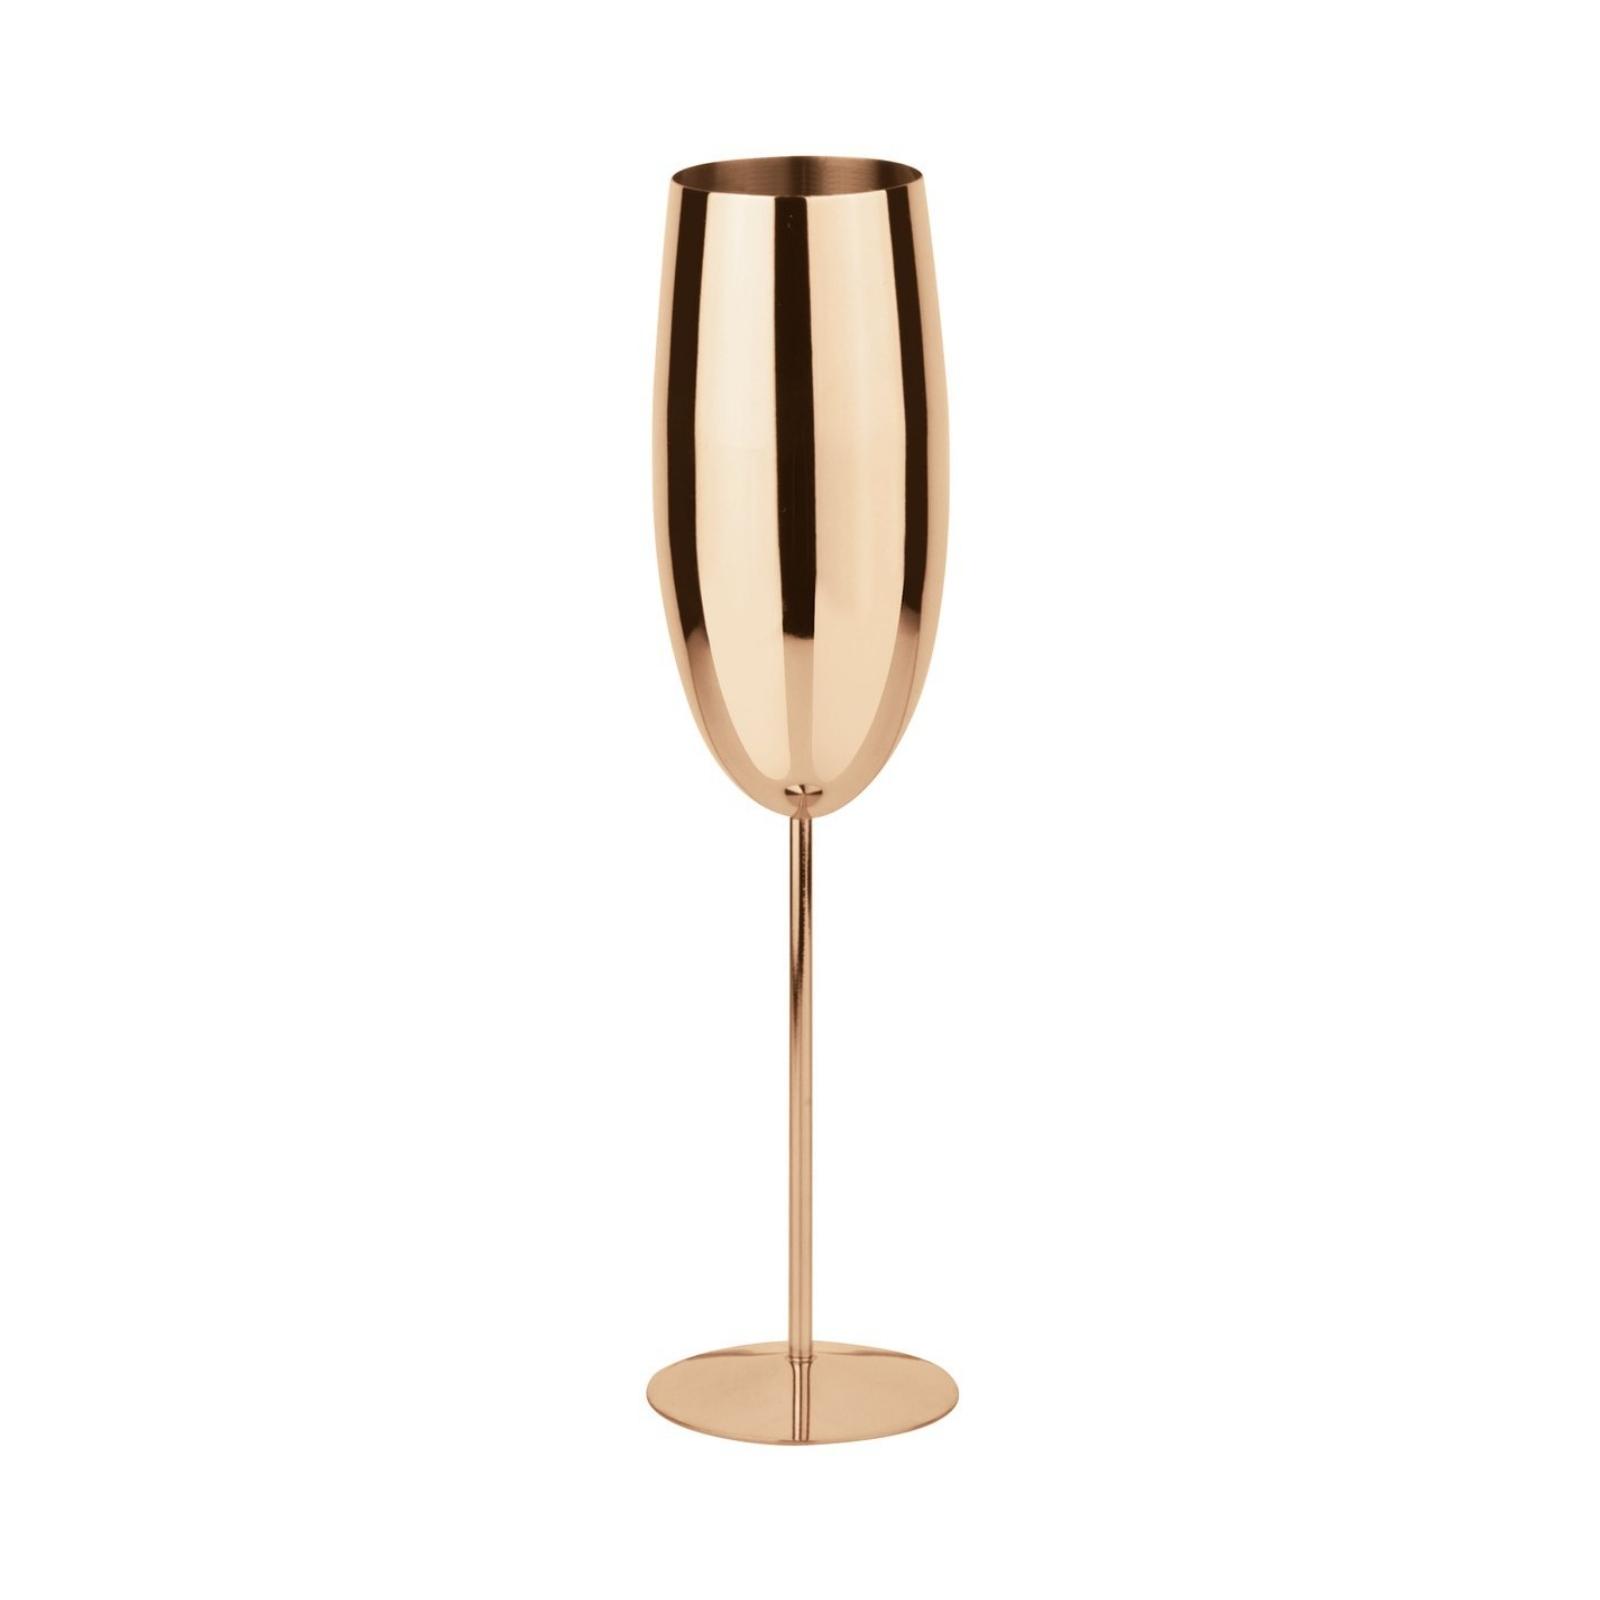 Champagne goblet 5 cm copper Sambonet